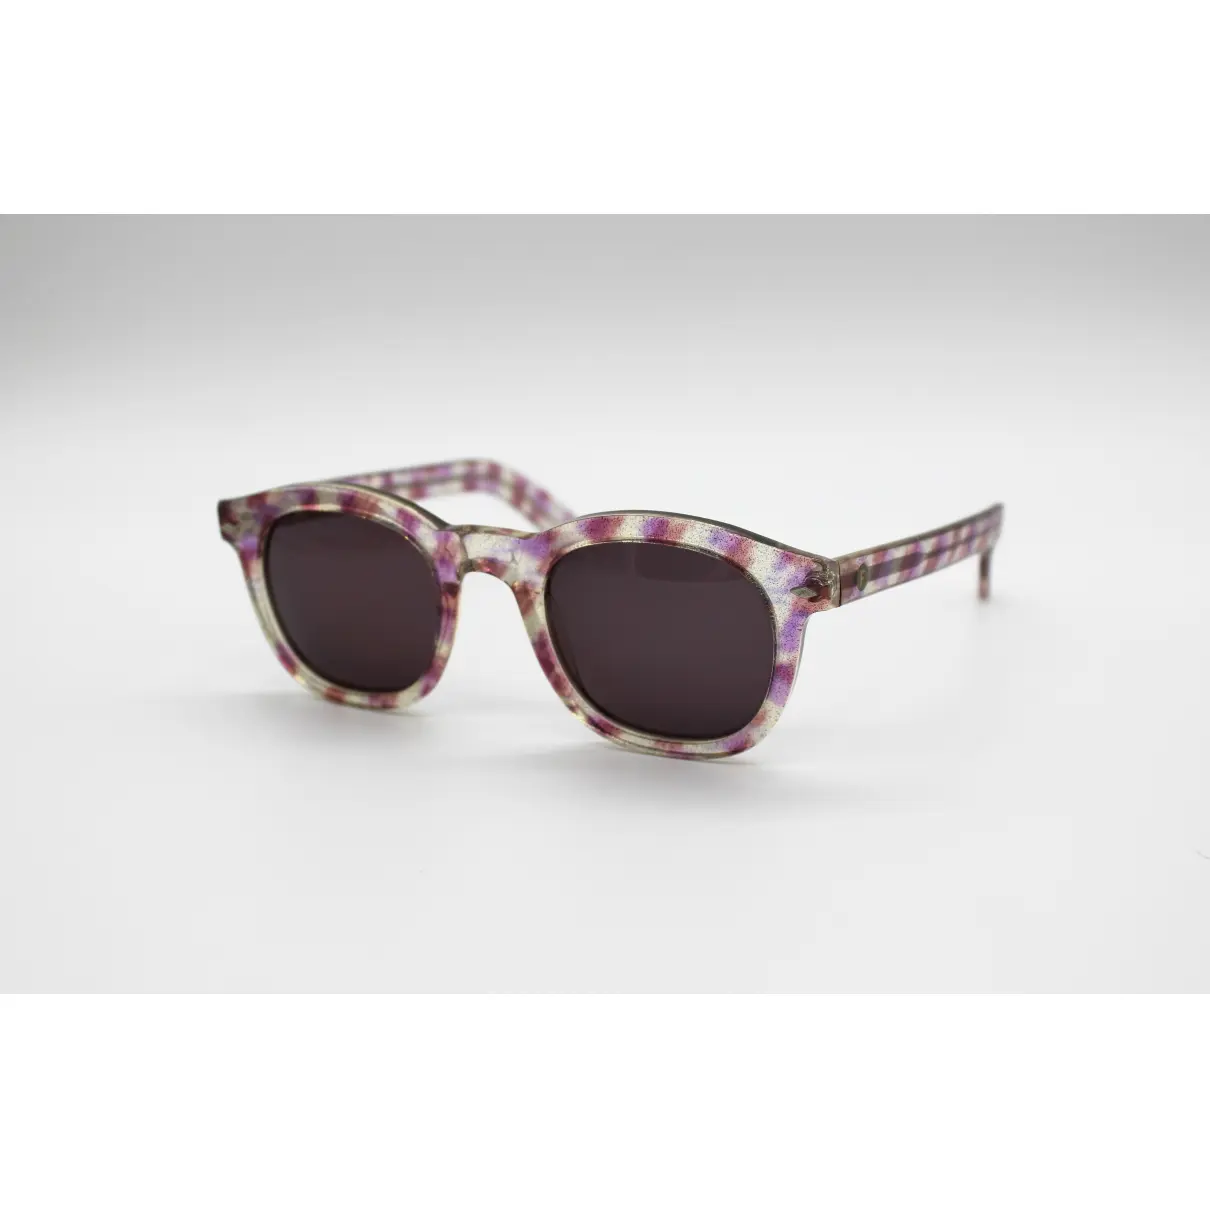 Buy Fiorucci Sunglasses online - Vintage